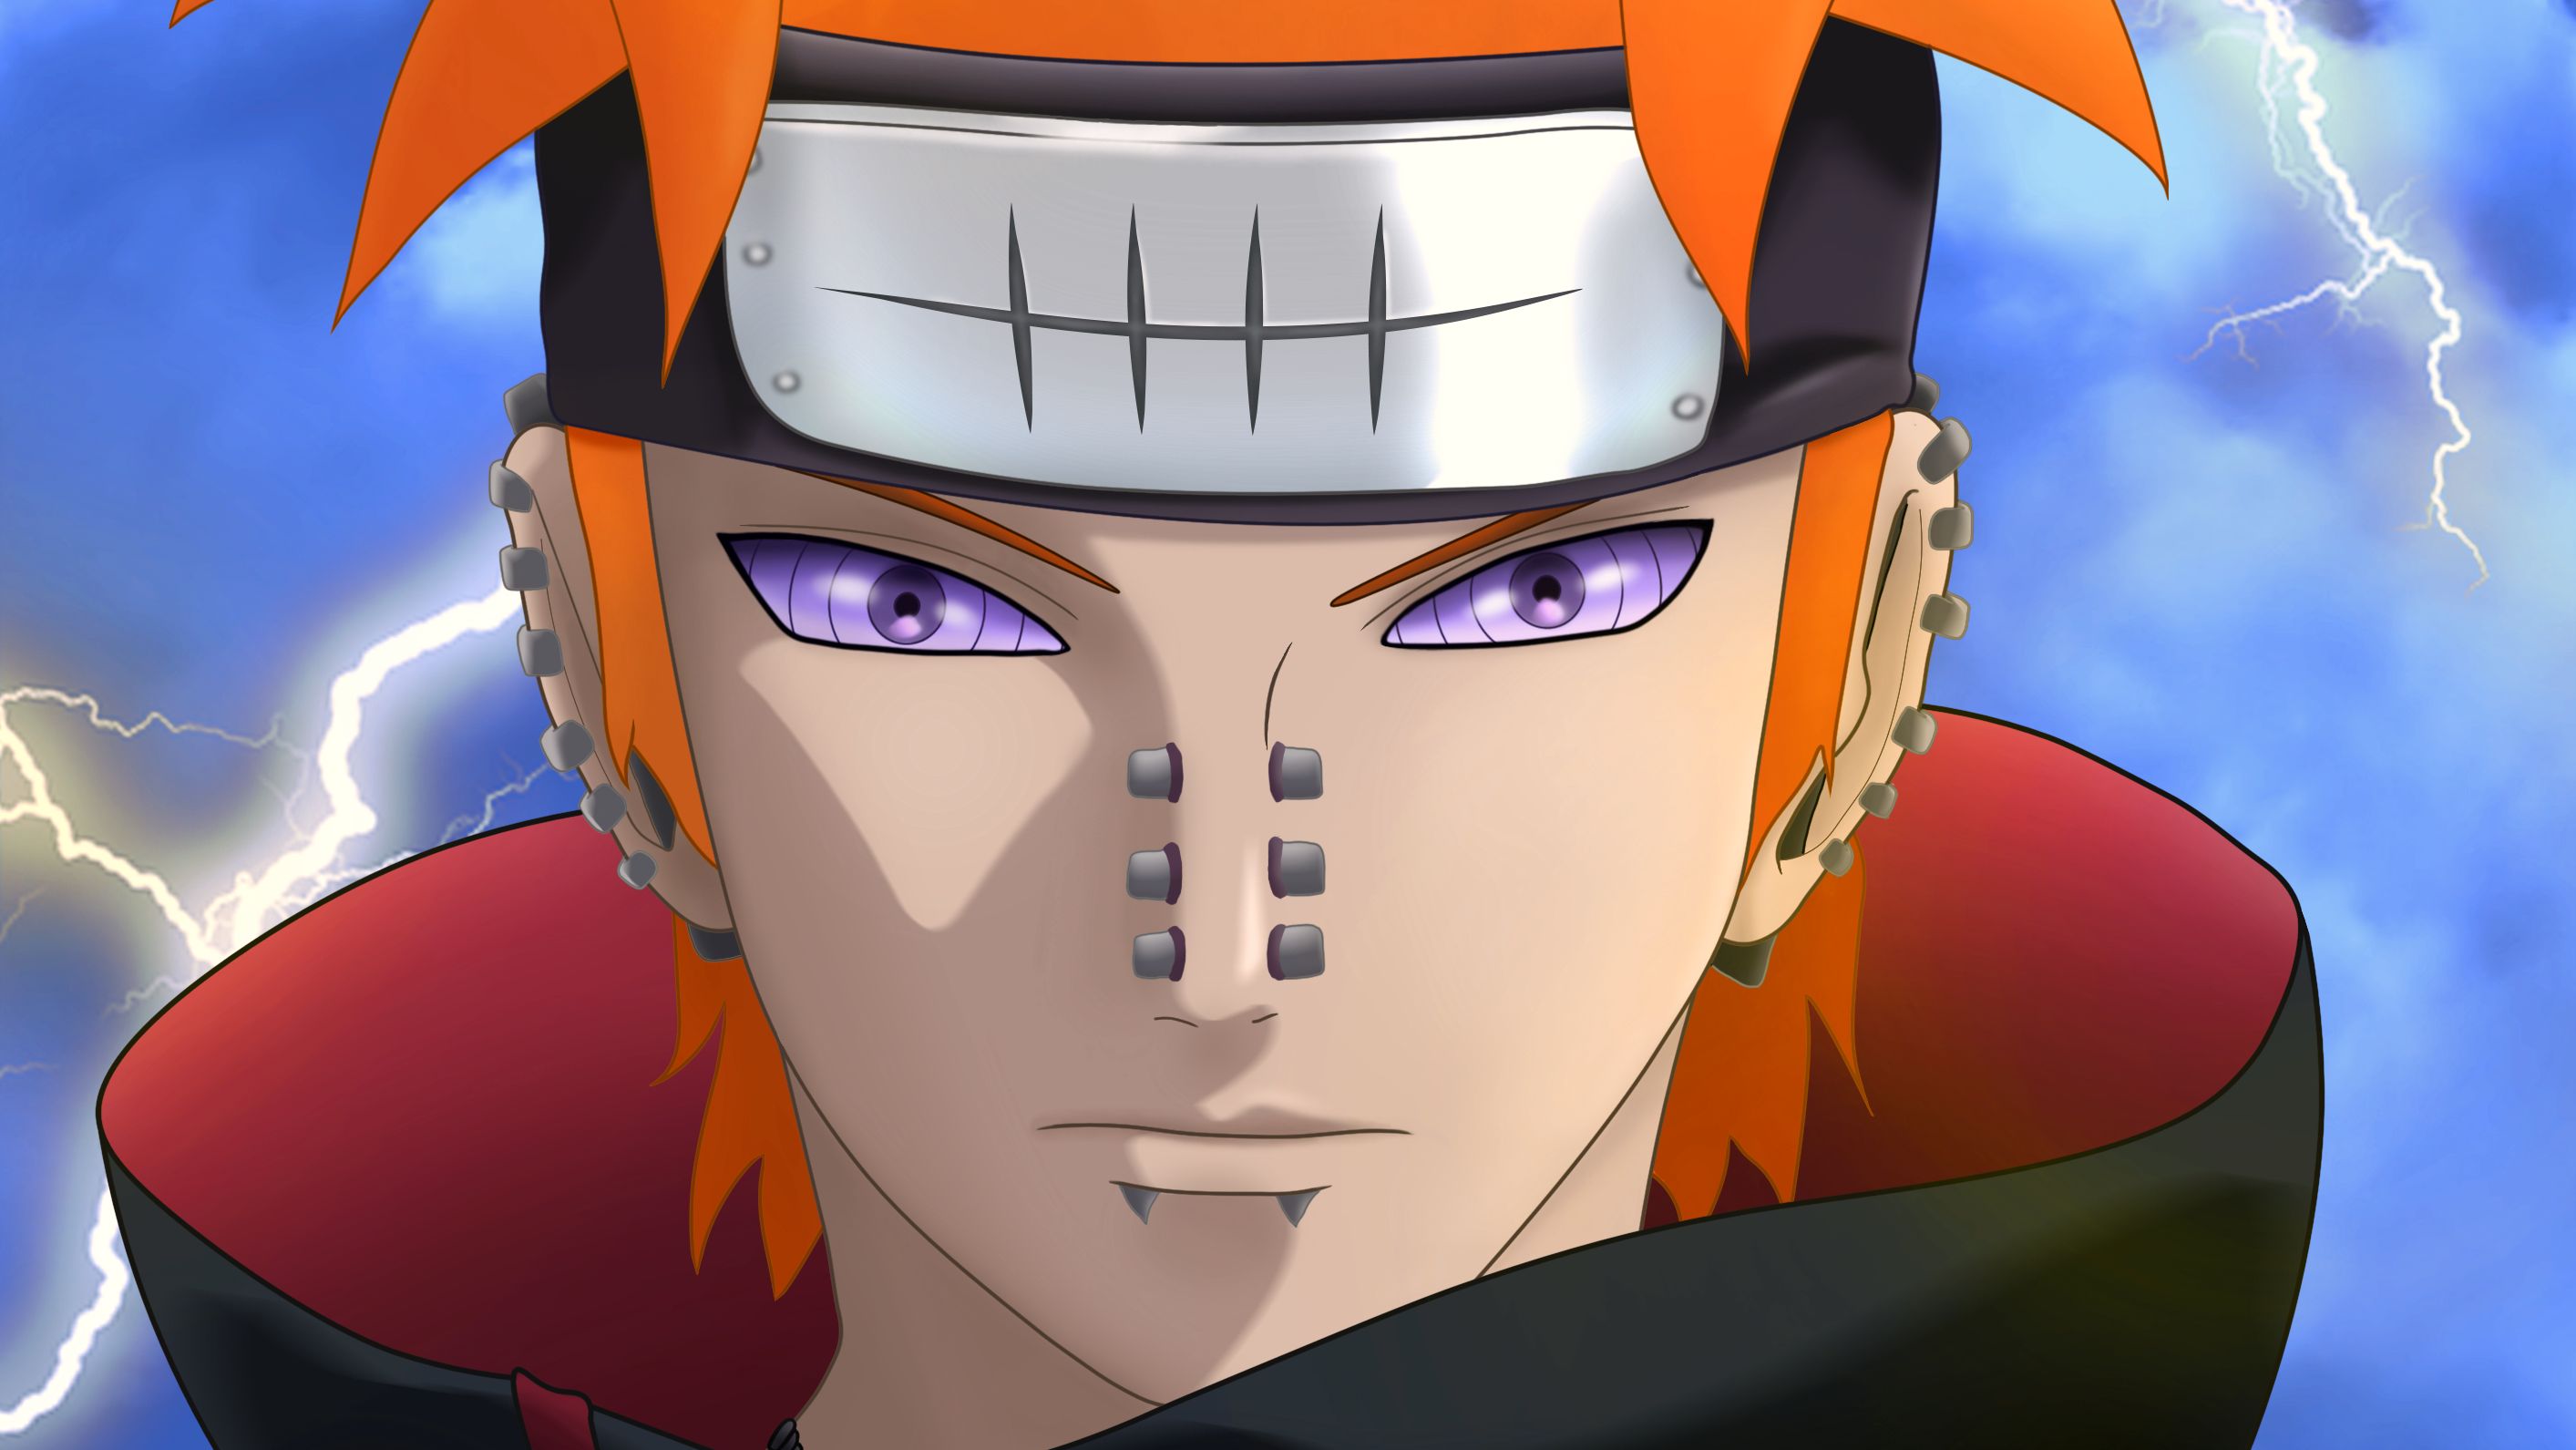 Baixar papel de parede para celular de Anime, Naruto, Dor (Naruto) gratuito.